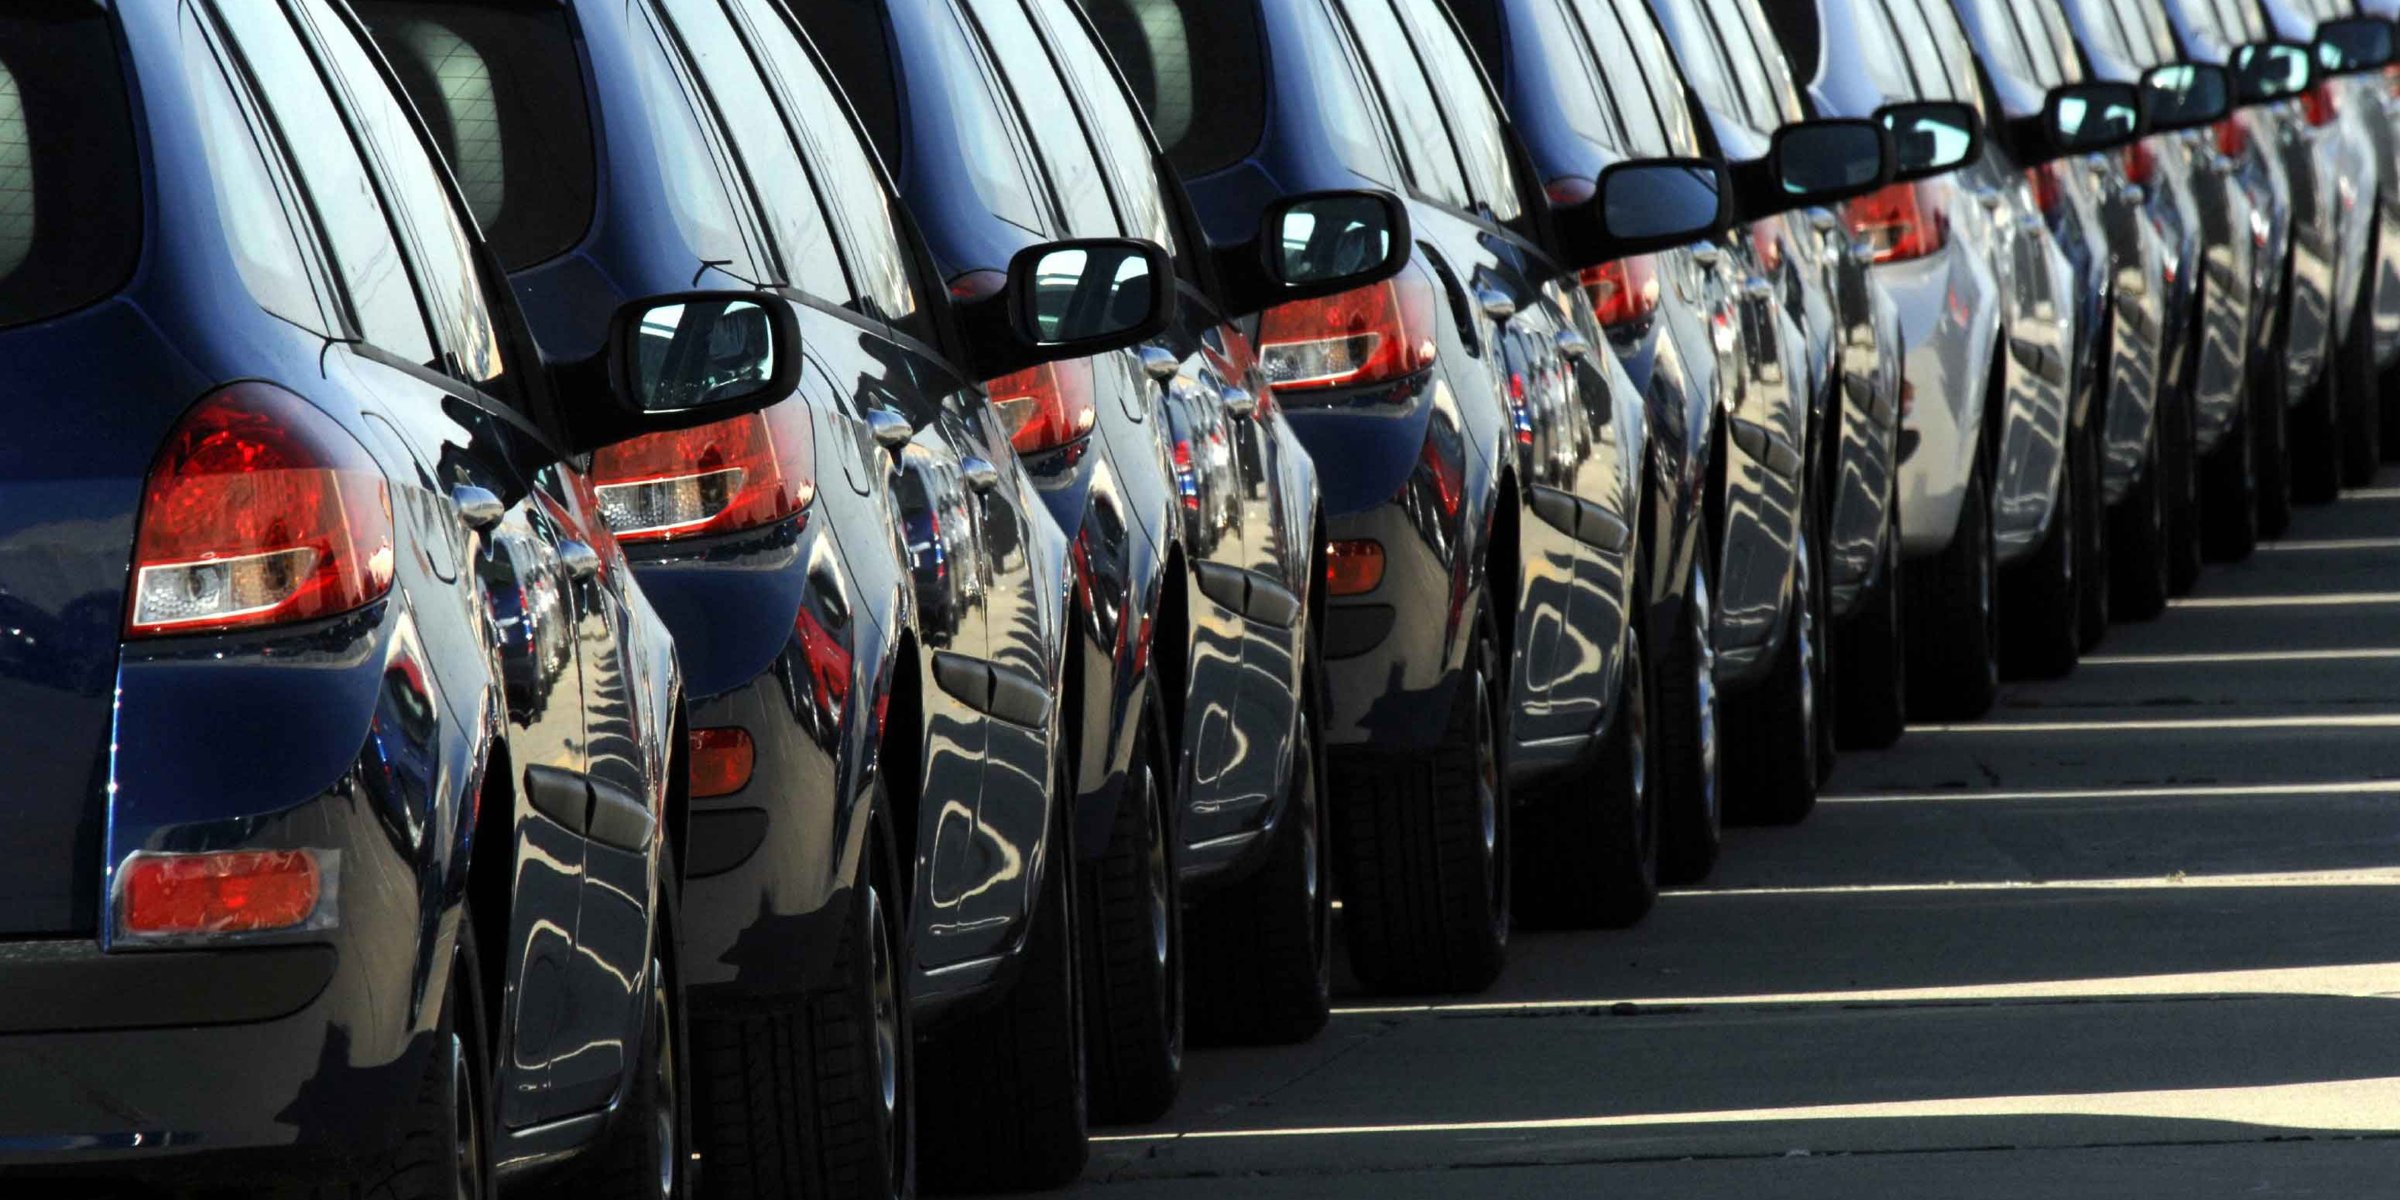 Car rental industry plans fleet renewals as recovery